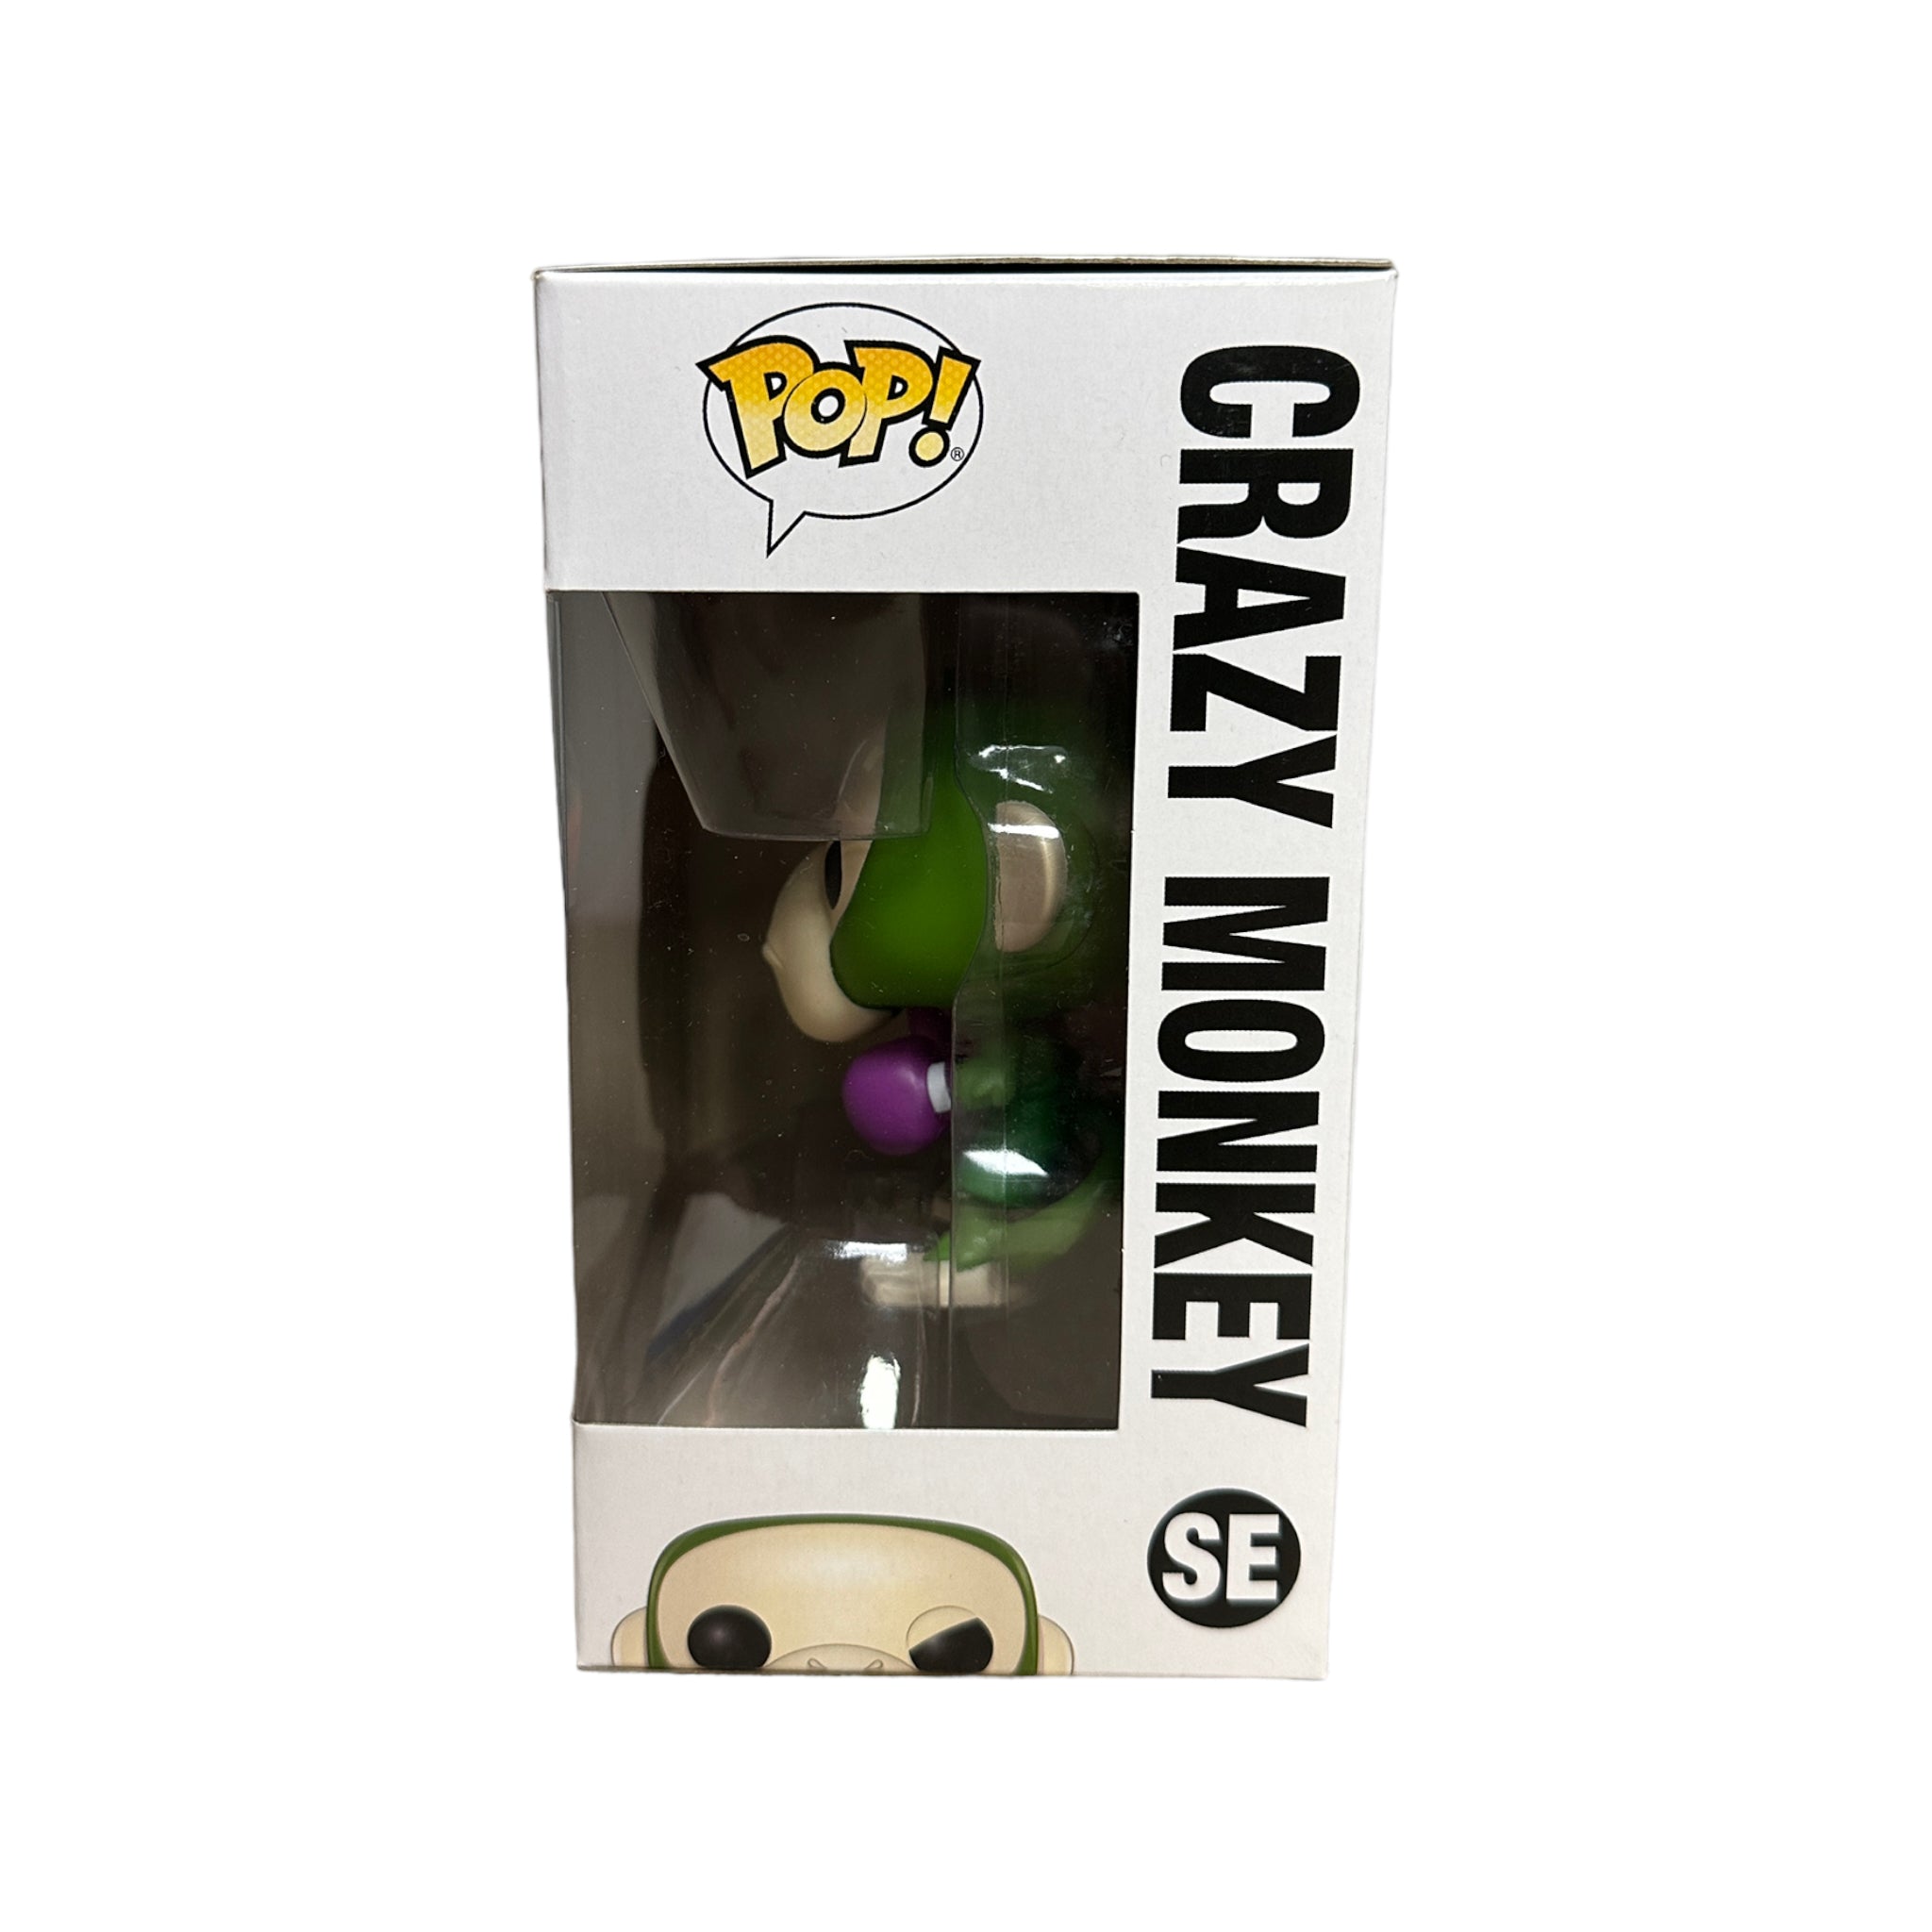 Crazy Monkey (Green) Funko Pop! - Crazy Monkey USA Exclusive LE50 - Condition 8.5/10